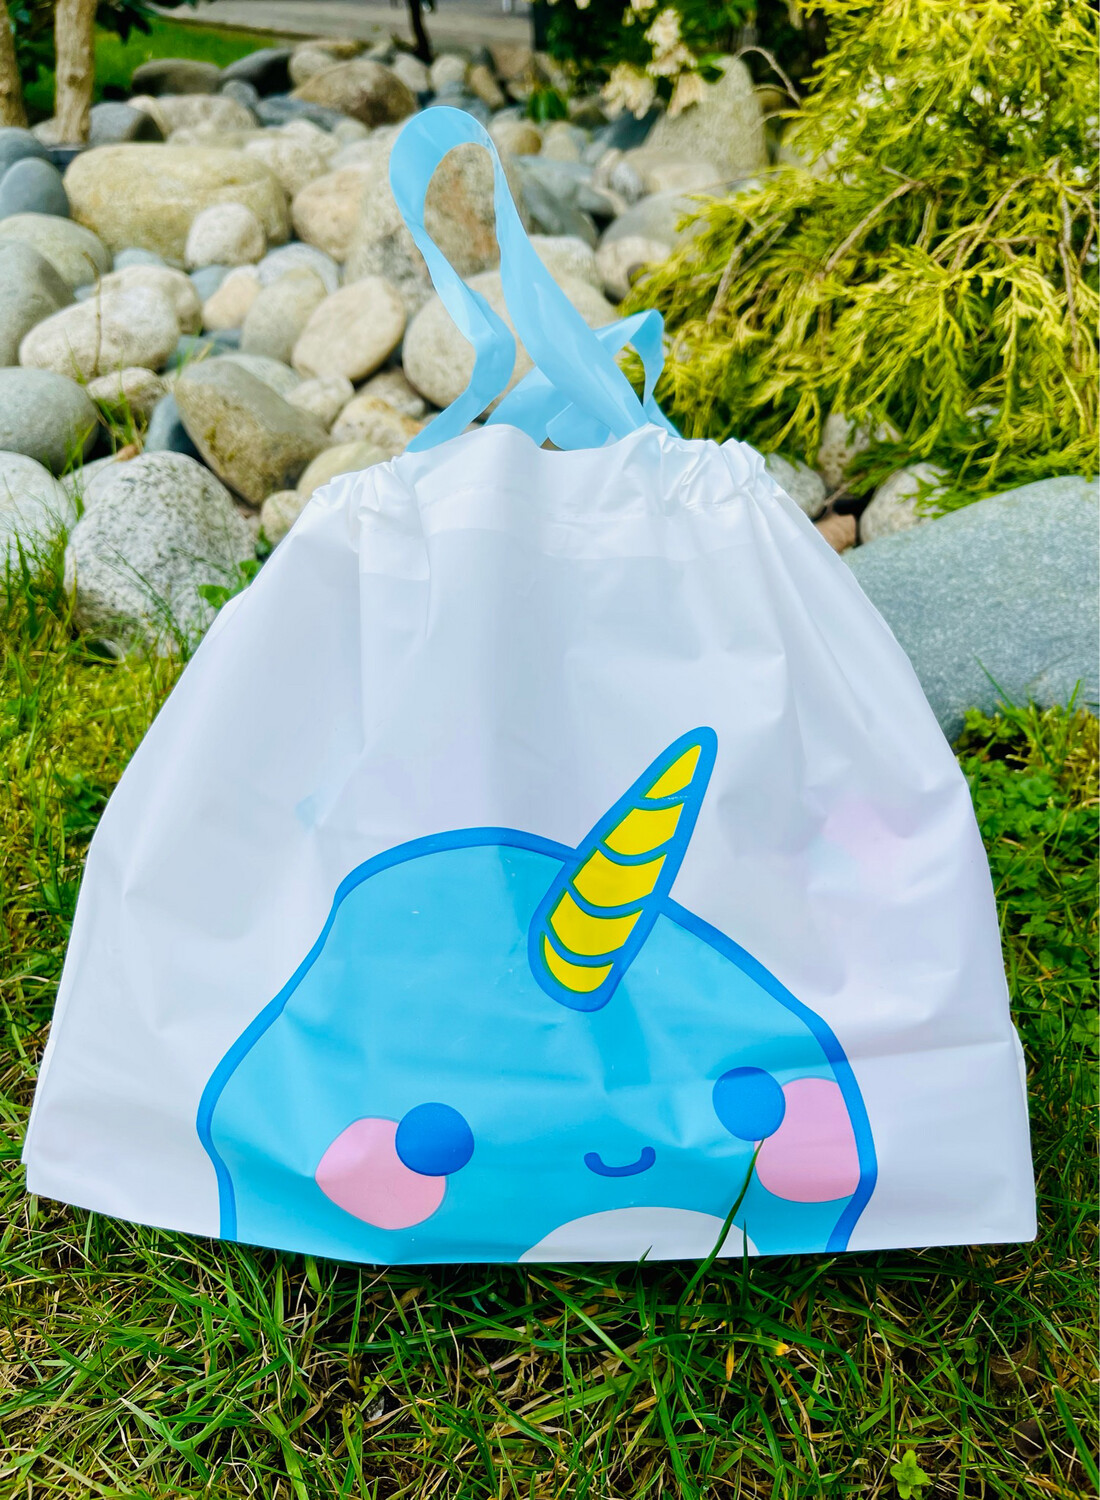 Rainbowcatz Mystery Squishy Grab Bag $35